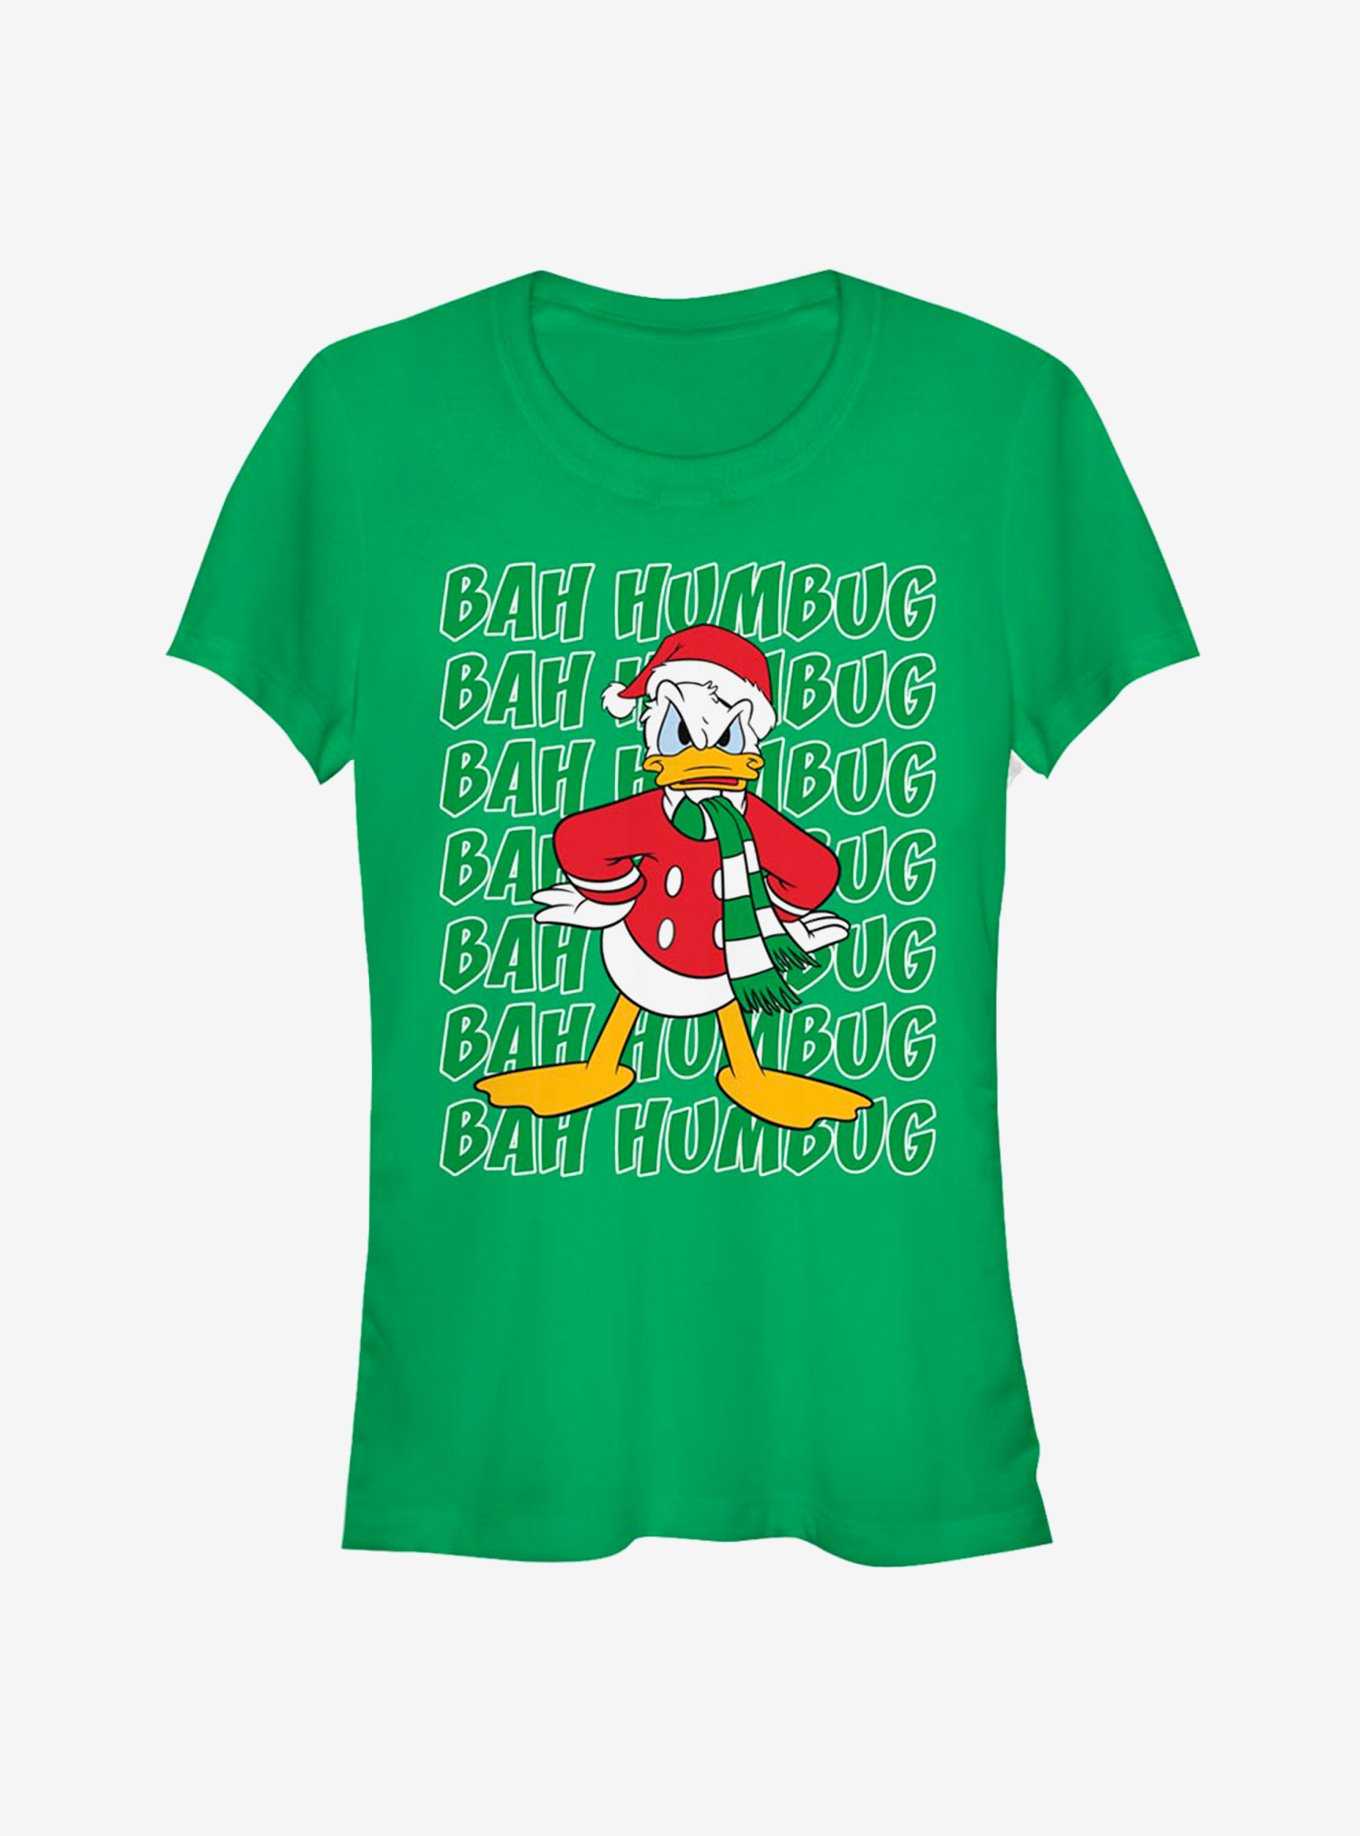 Disney Donald Duck Scrooge Classic Girls T-Shirt, , hi-res